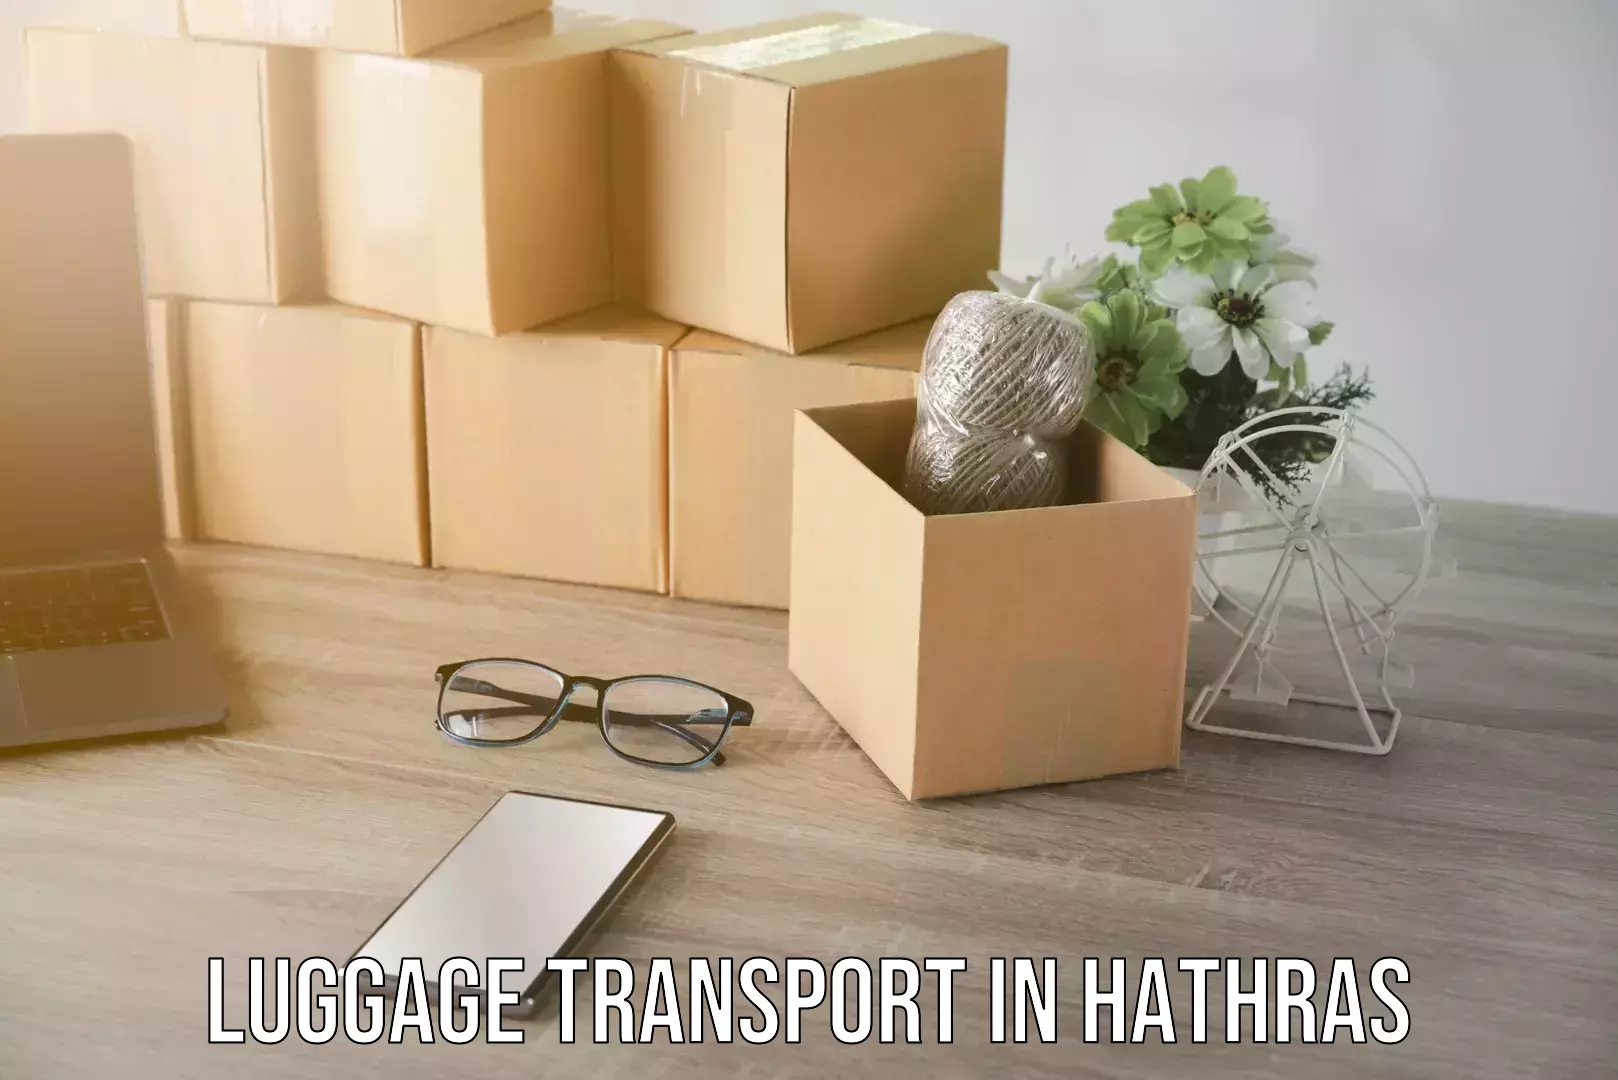 Urgent luggage shipment in Hathras